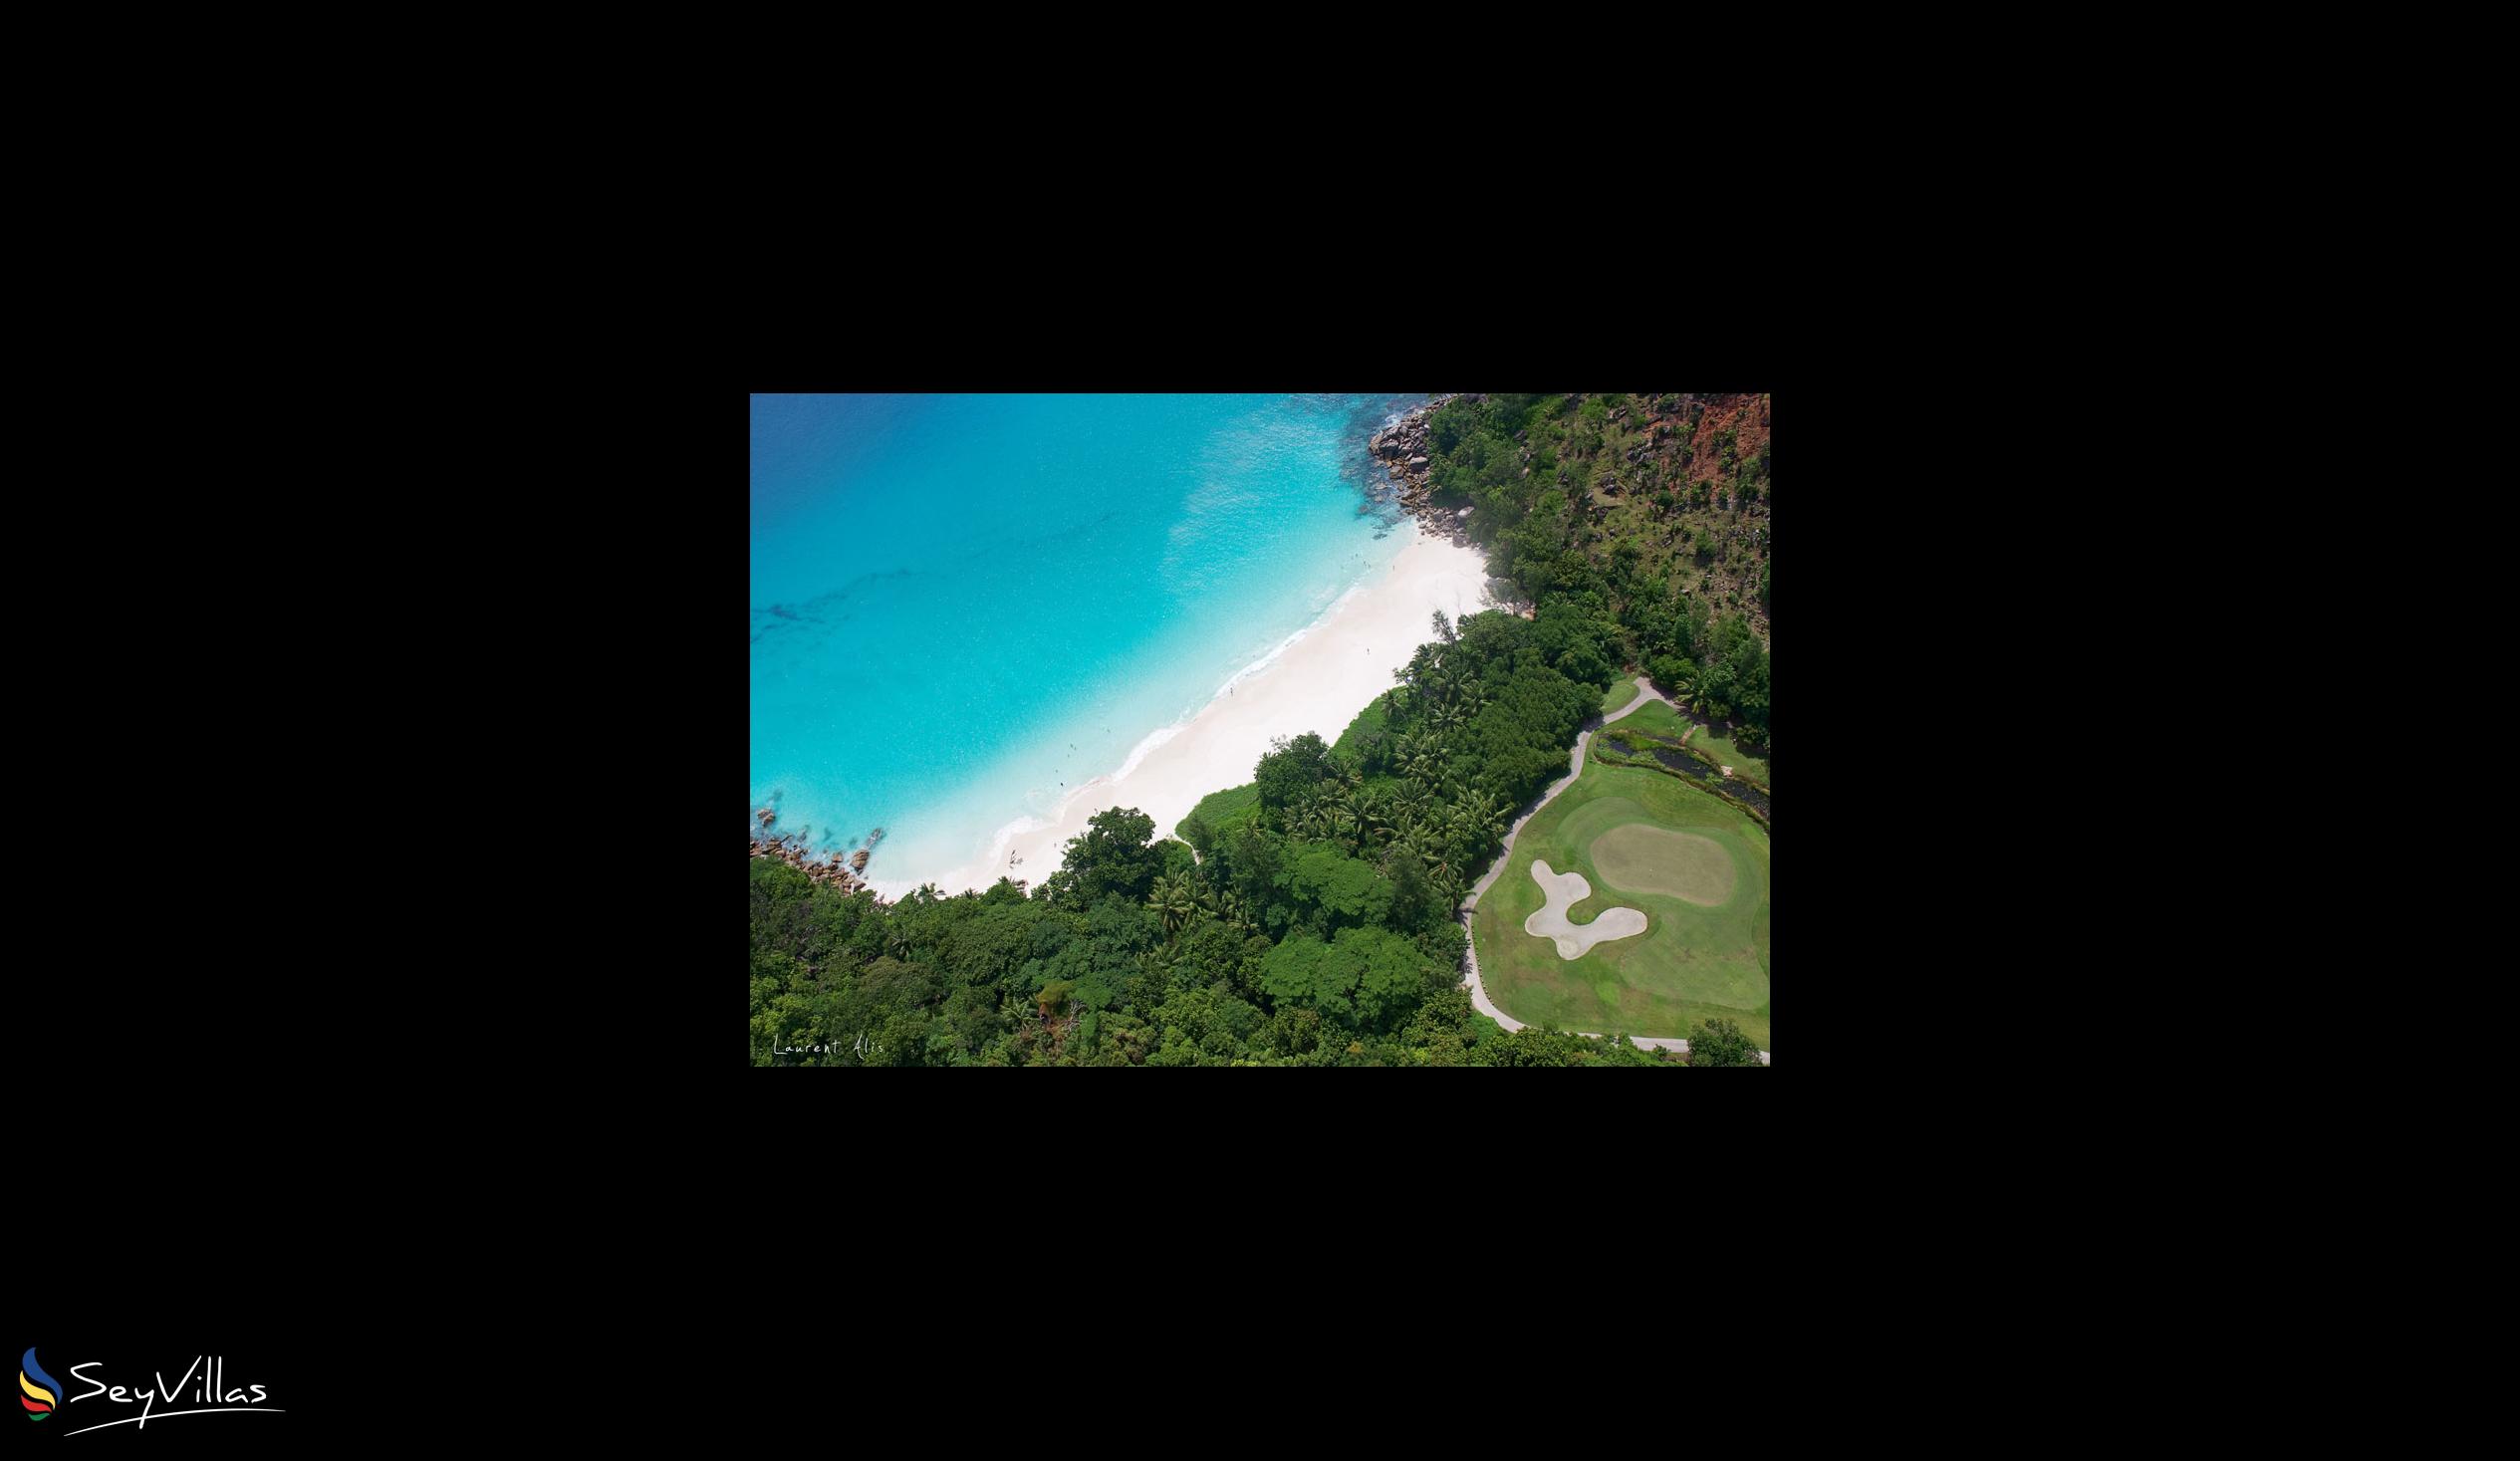 Foto 34: Silhouette Sea Pearl - Spiagge - Seychelles (Seychelles)